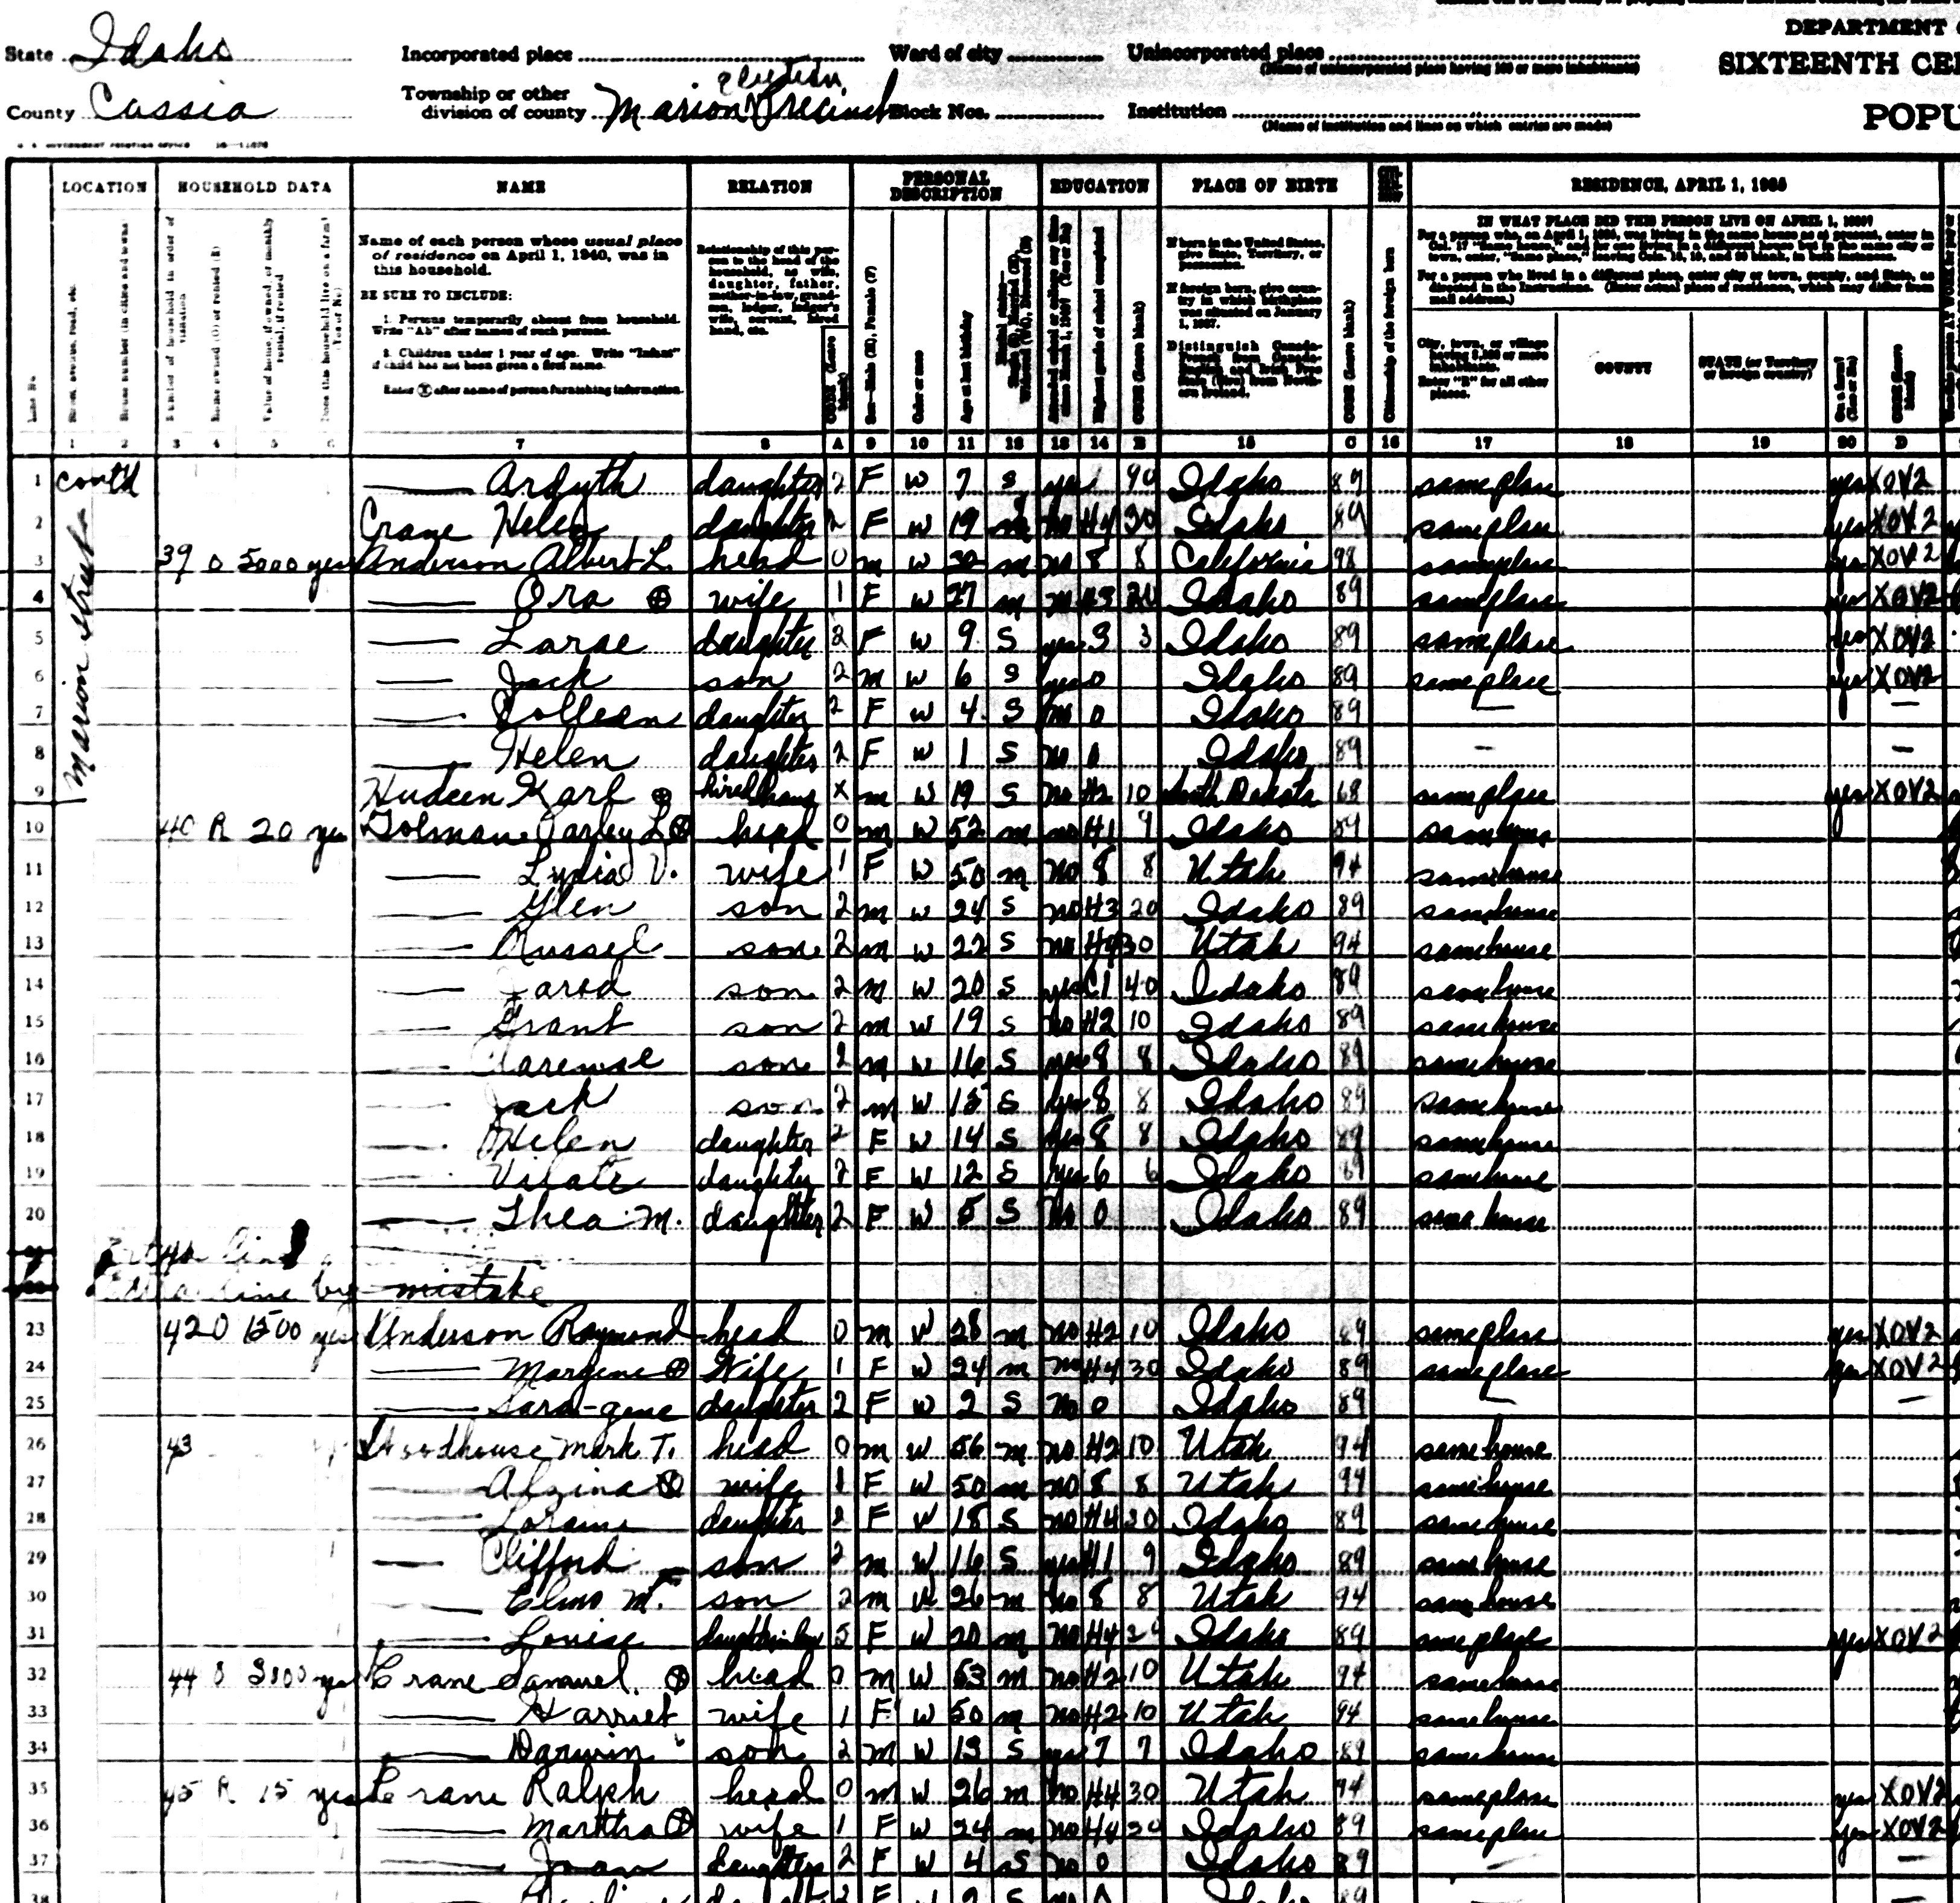 1940 U.S Census Record-Parley Lambert and Lydia Vilate Tolman